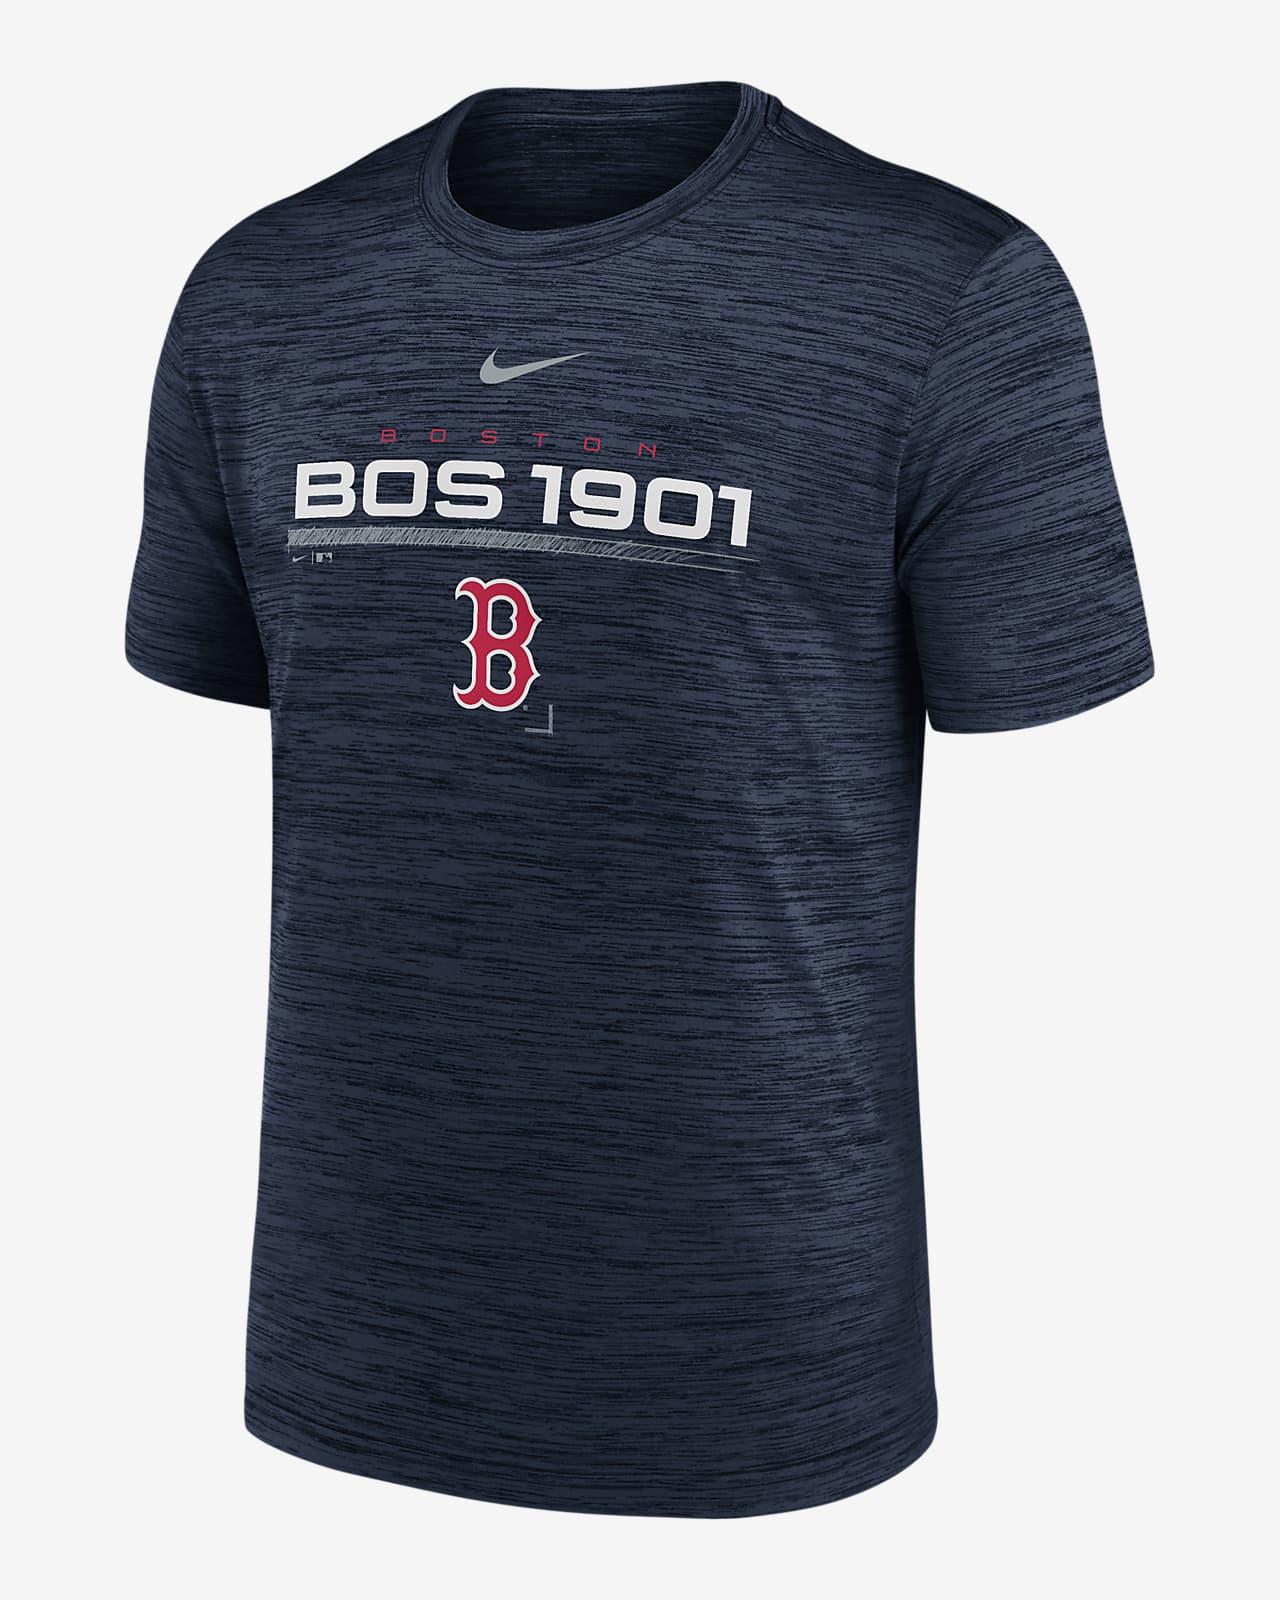 Nike Velocity Team (MLB Boston Red Sox) Men's T-Shirt.